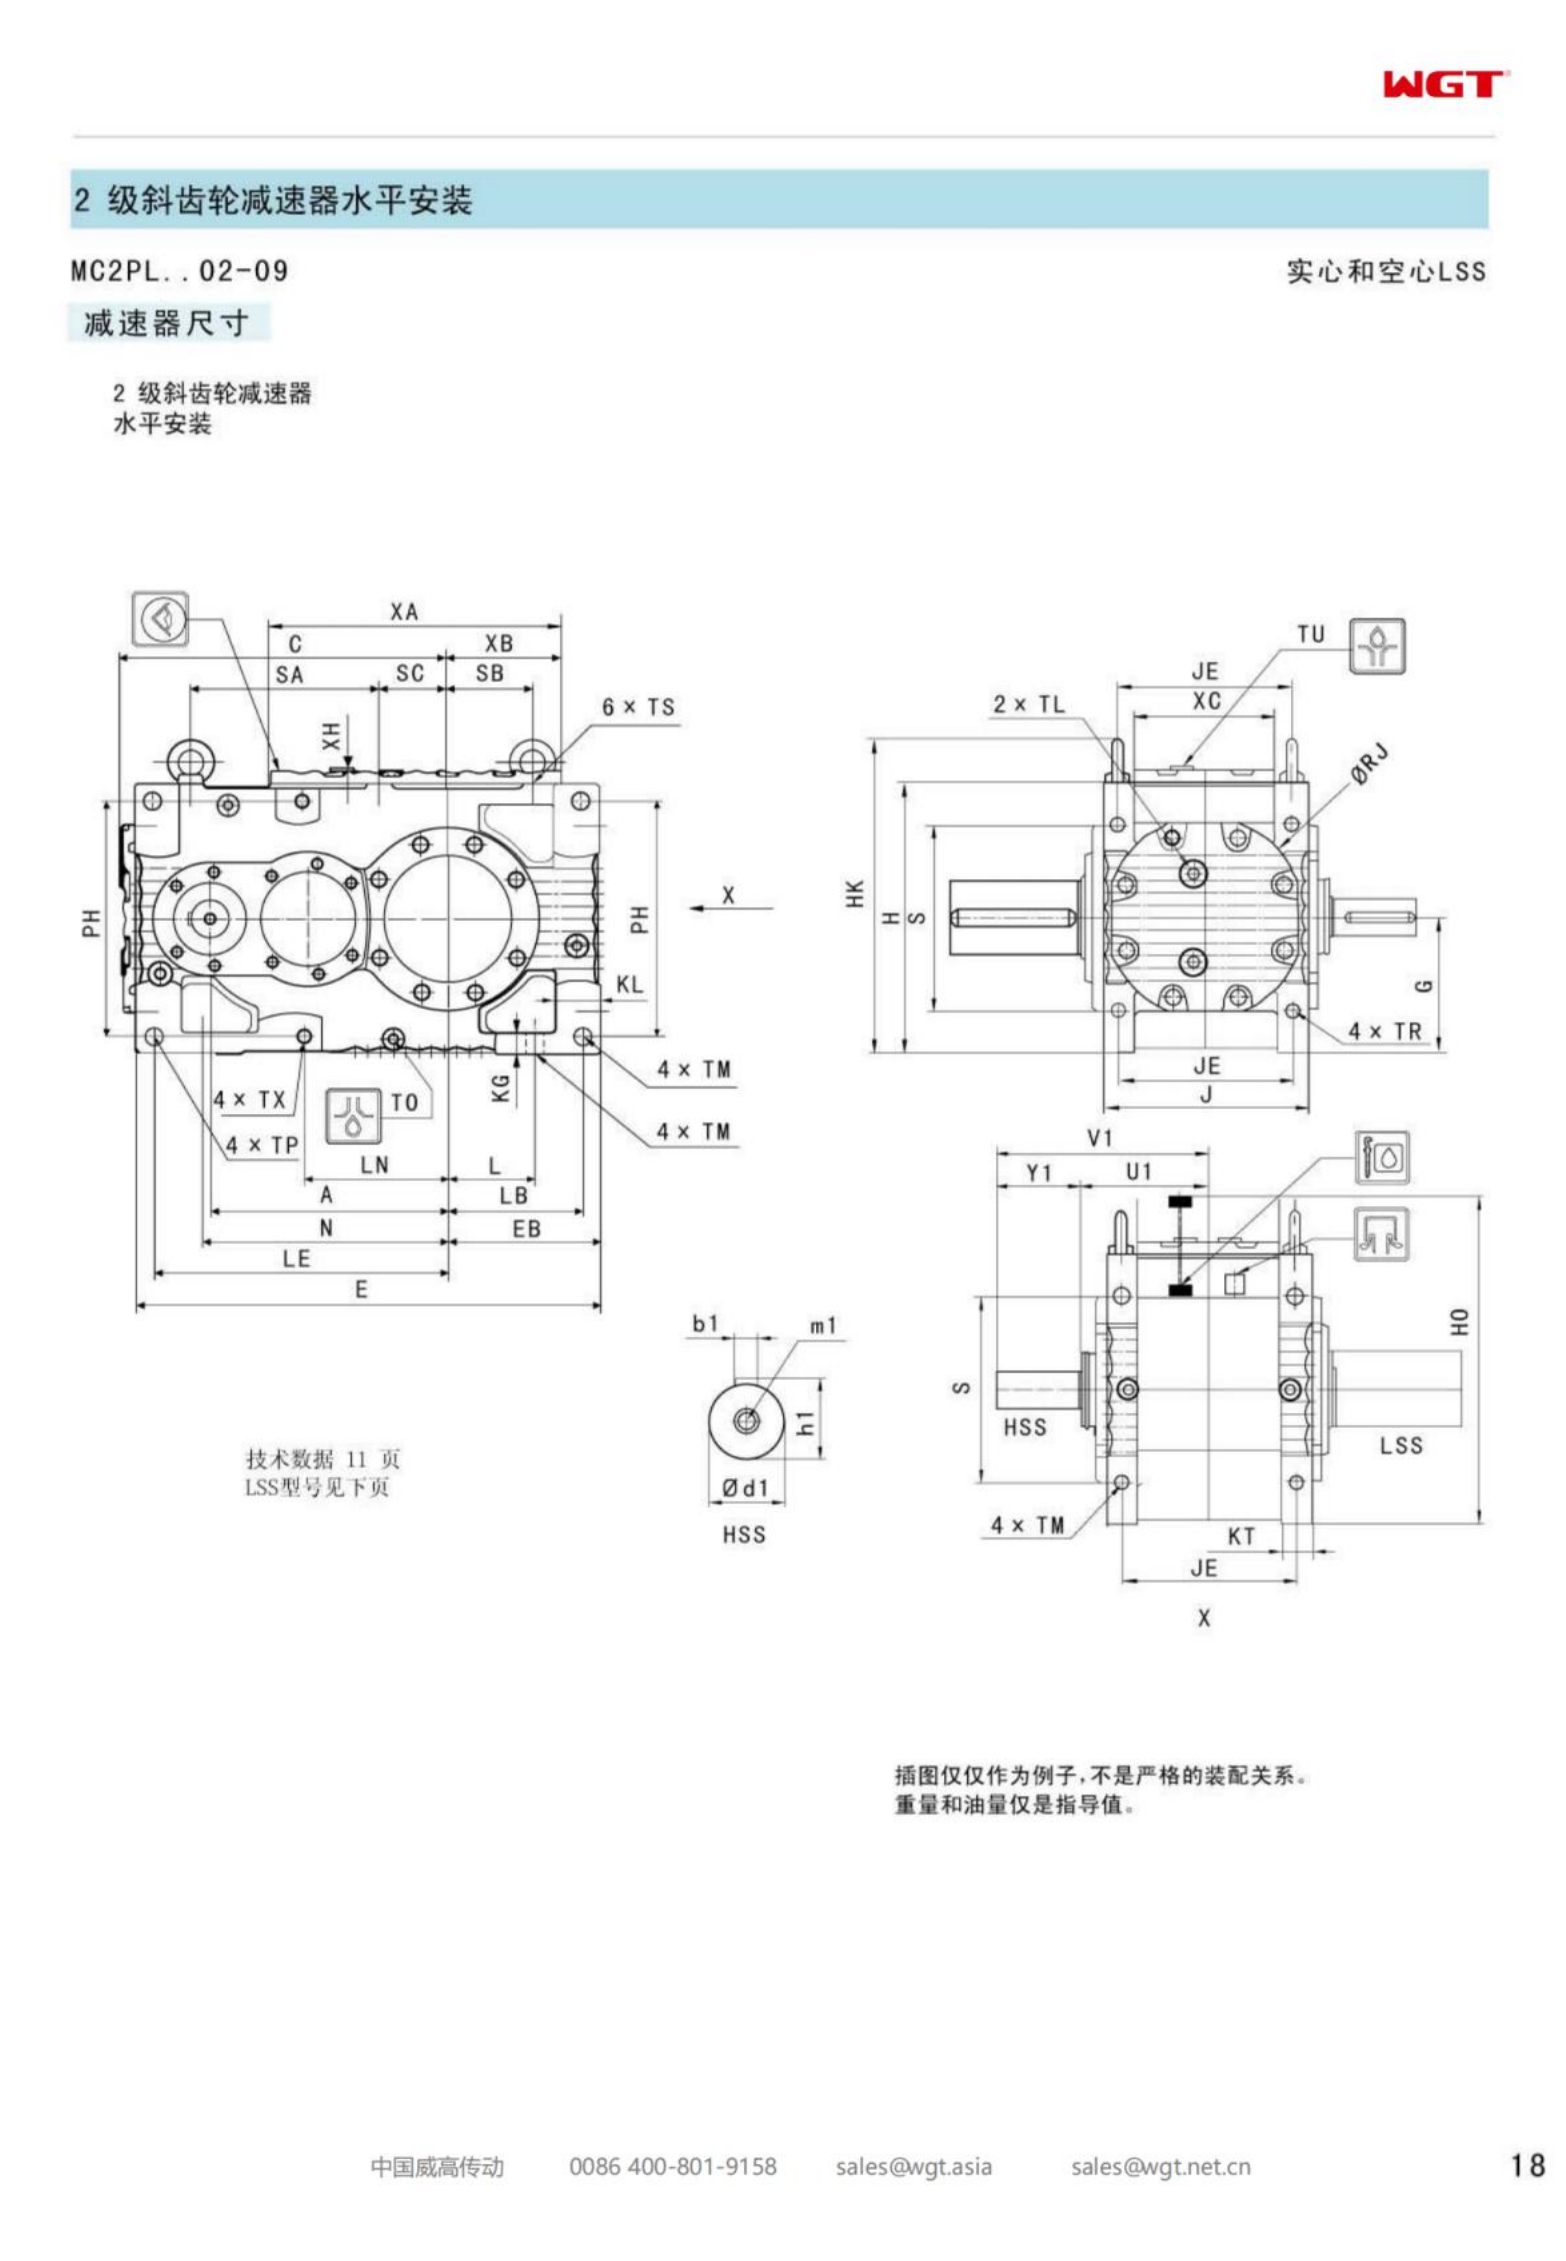 MC2PLST06 replaces _SEW_MC_Series gearbox (patent)